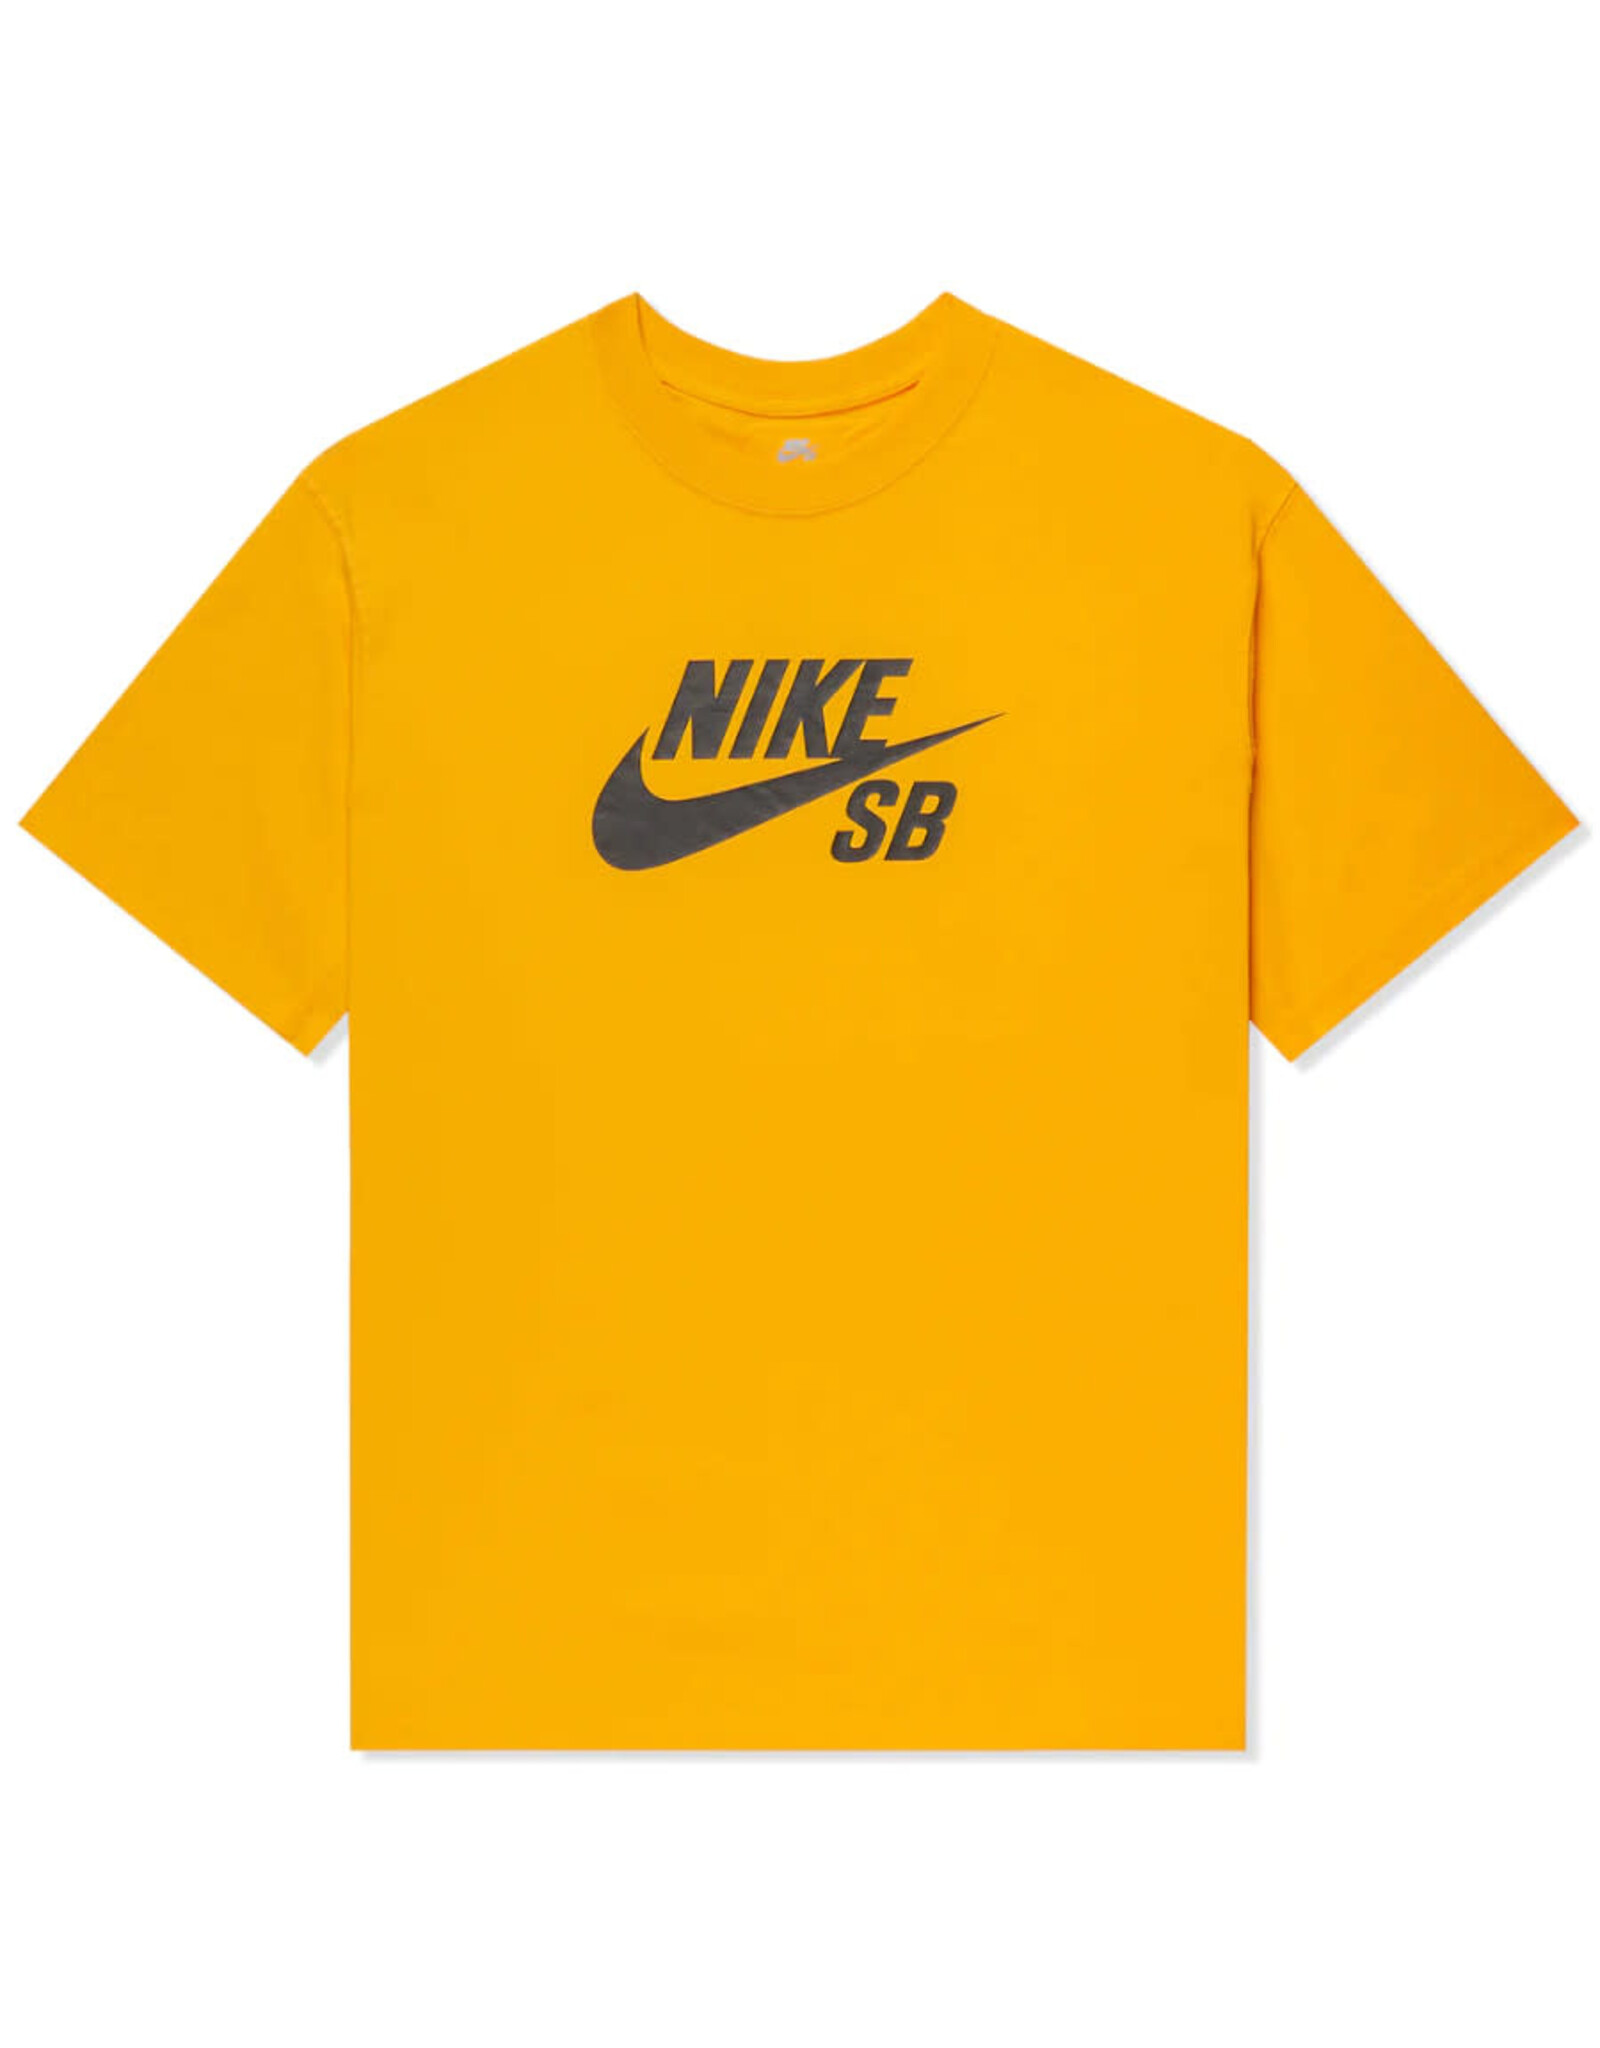 Nike SB Nike SB Tee Loose Fit Center Logo S/S (Gold/Black)